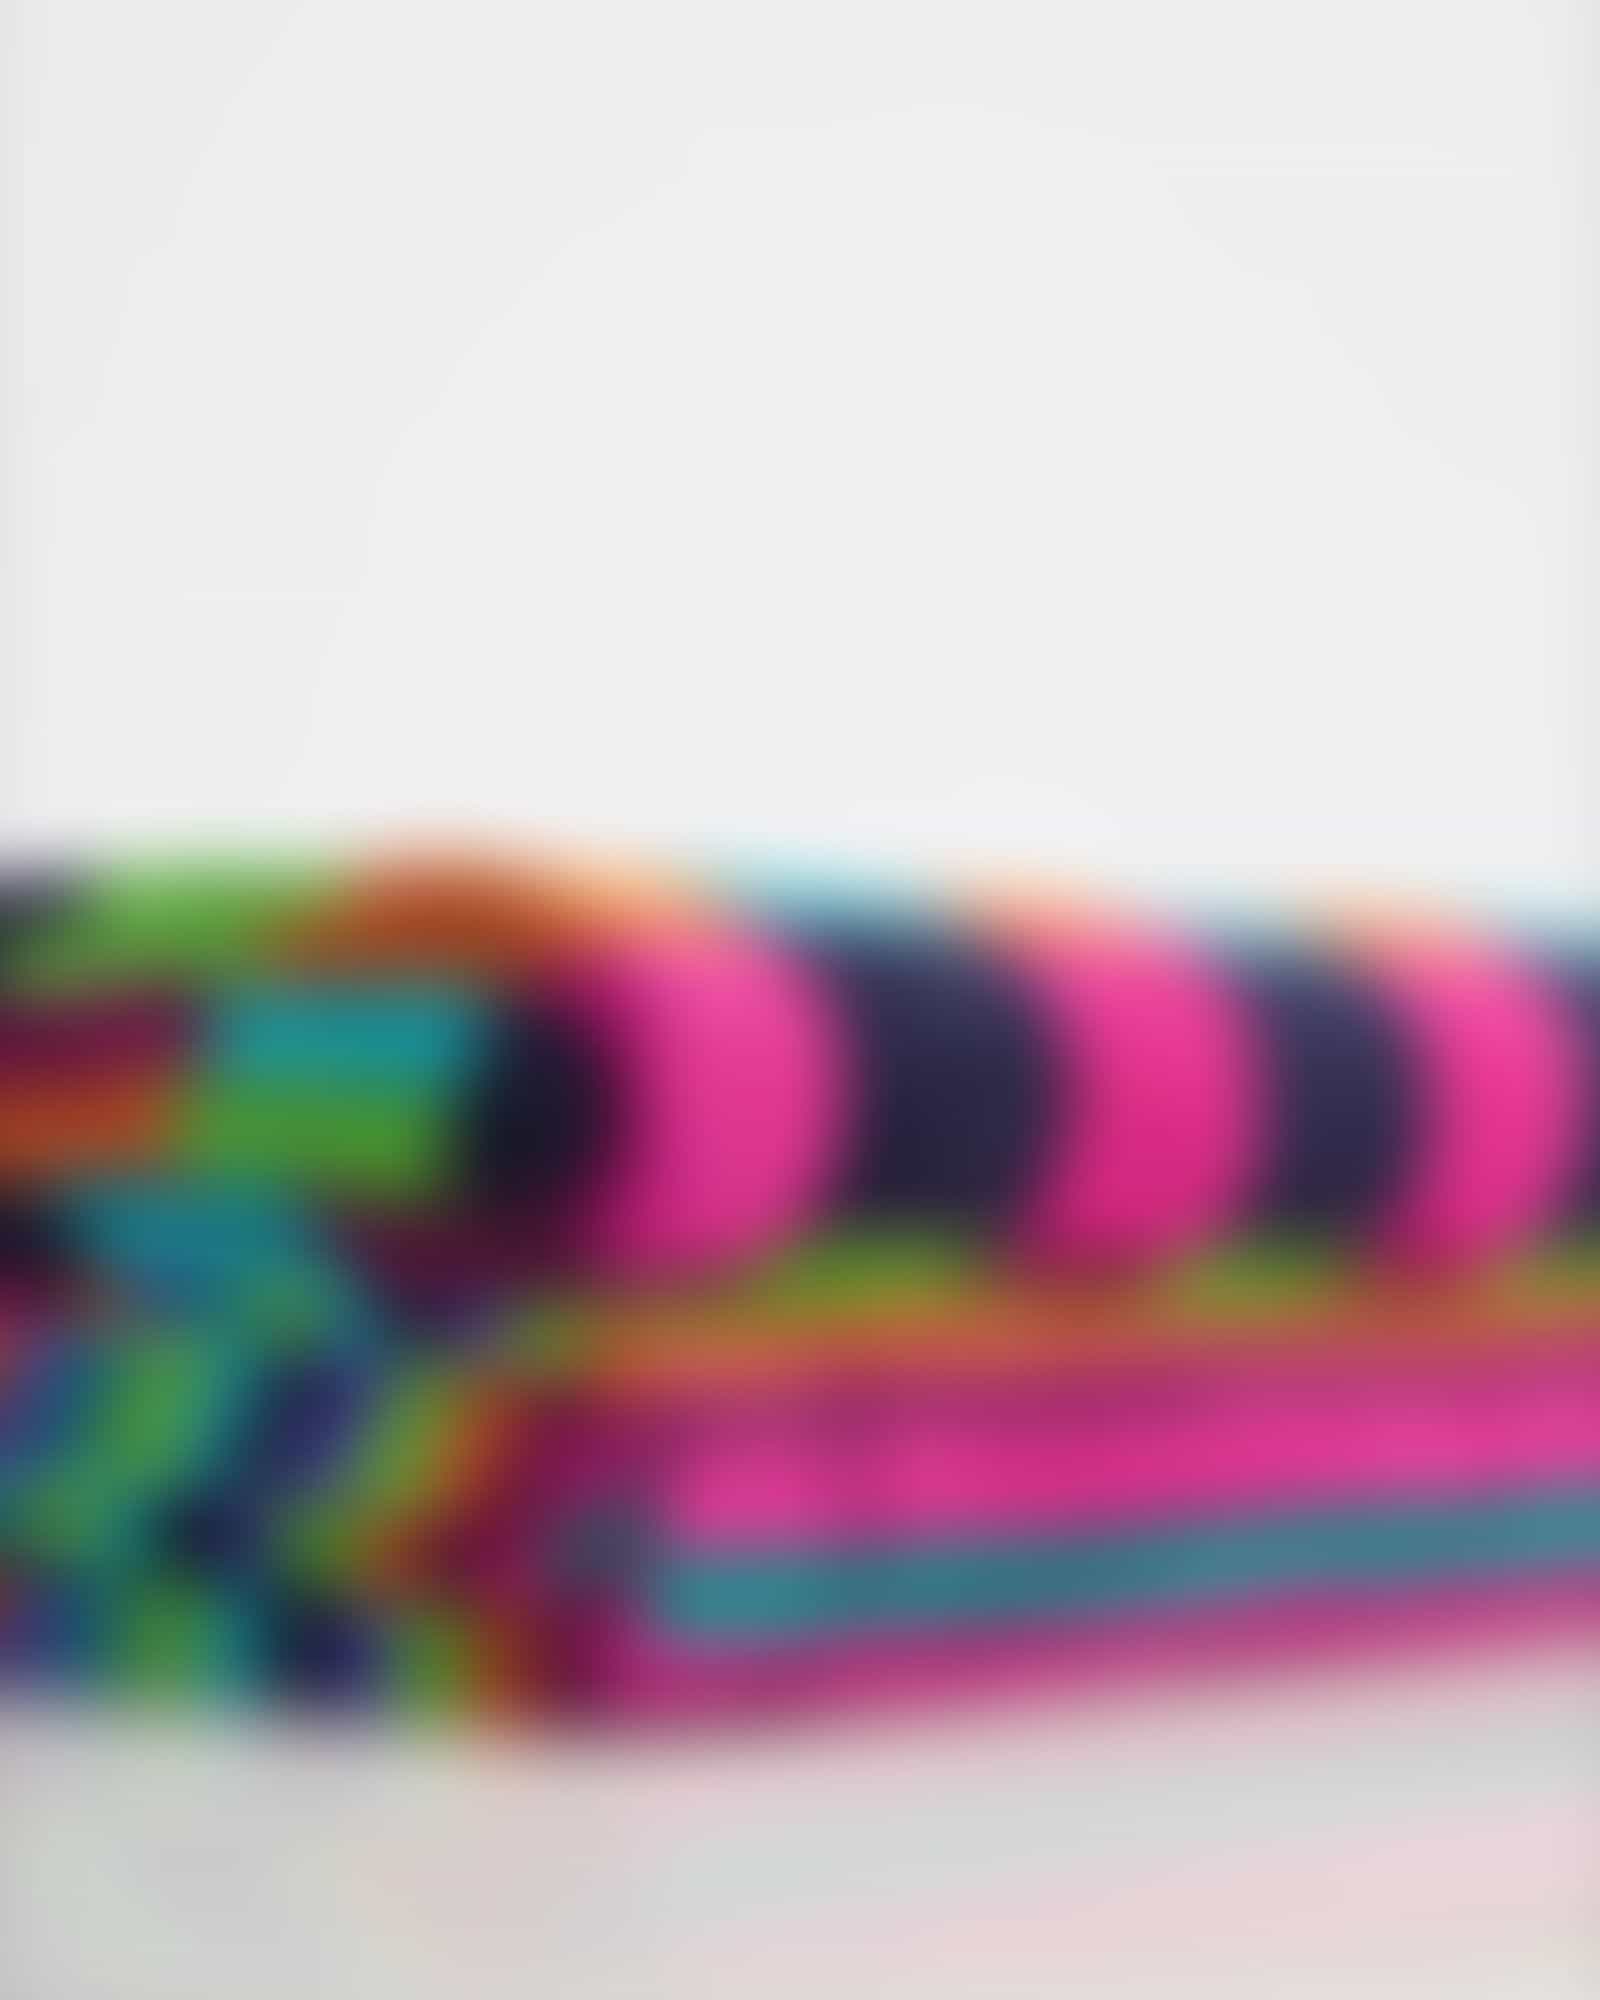 Cawö - Life Style Karo 7047 - Farbe: 84 - multicolor - Saunatuch 70x180 cm